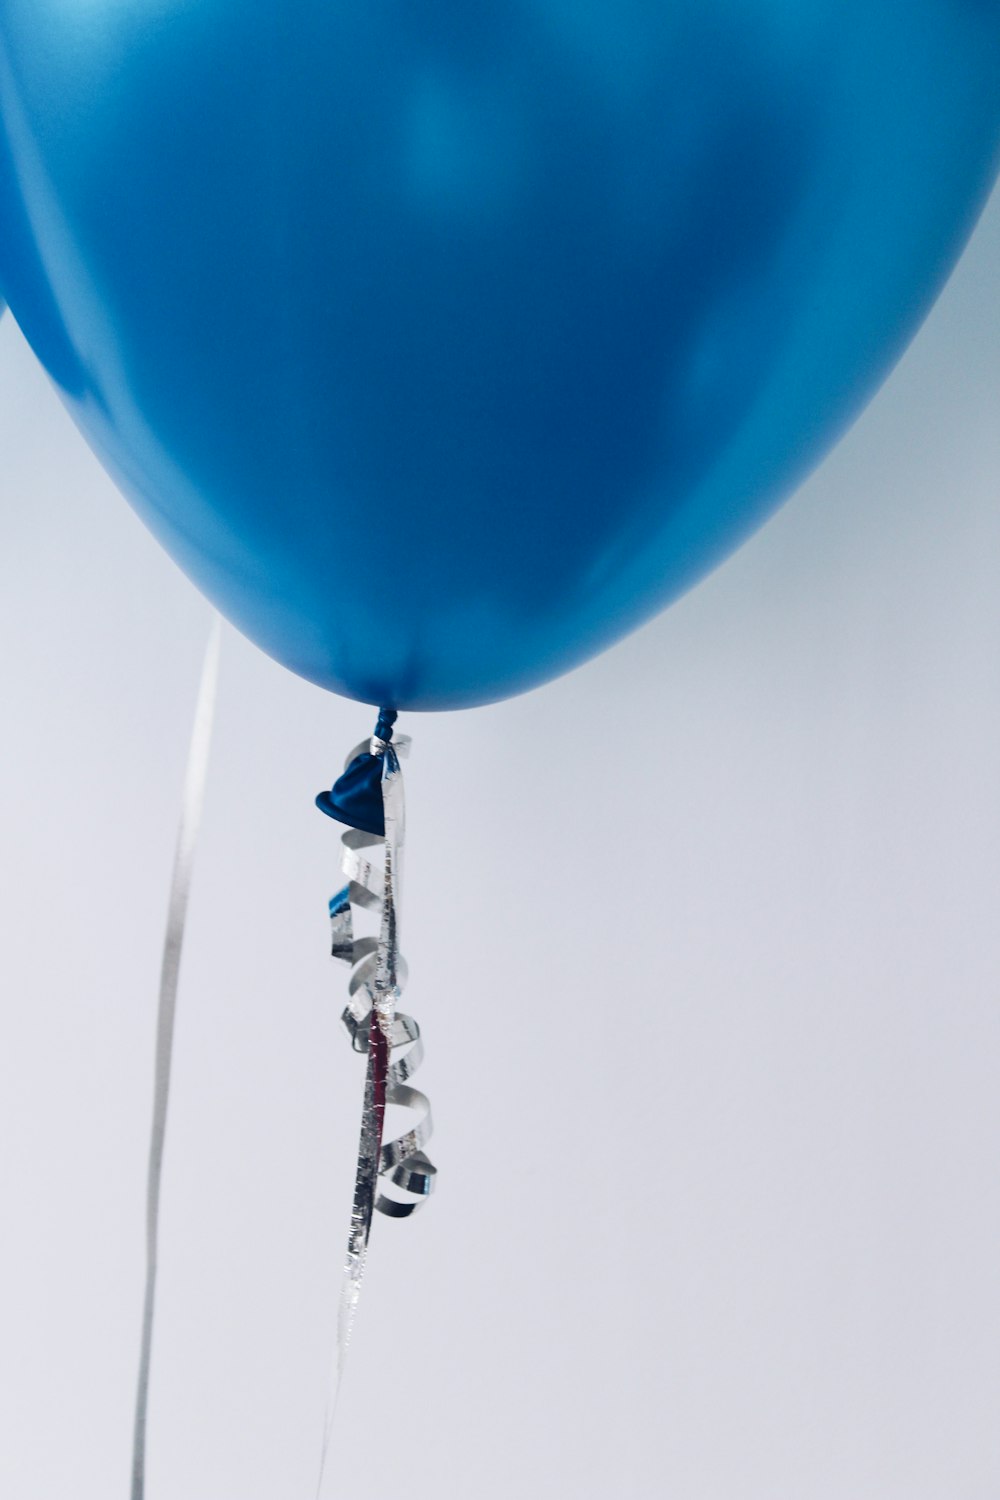 blue balloon